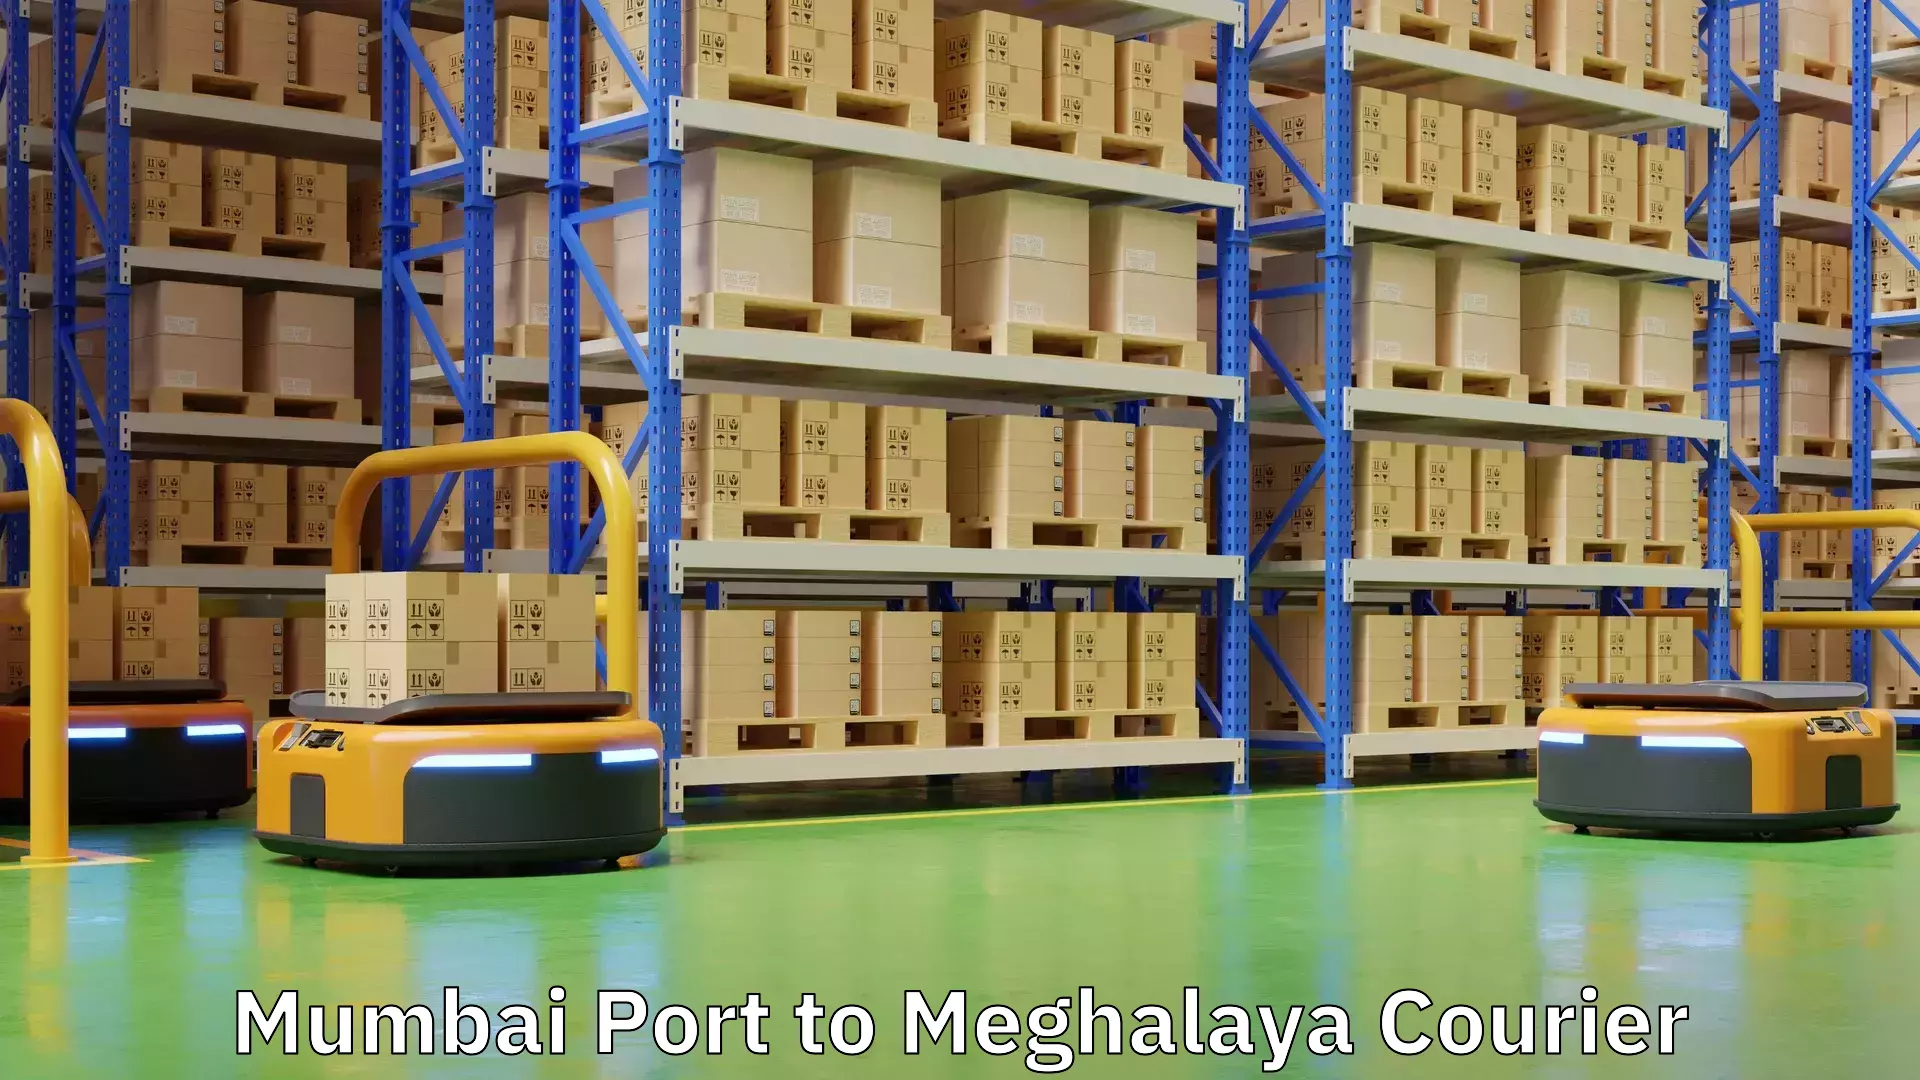 Logistics solutions Mumbai Port to Dkhiah West